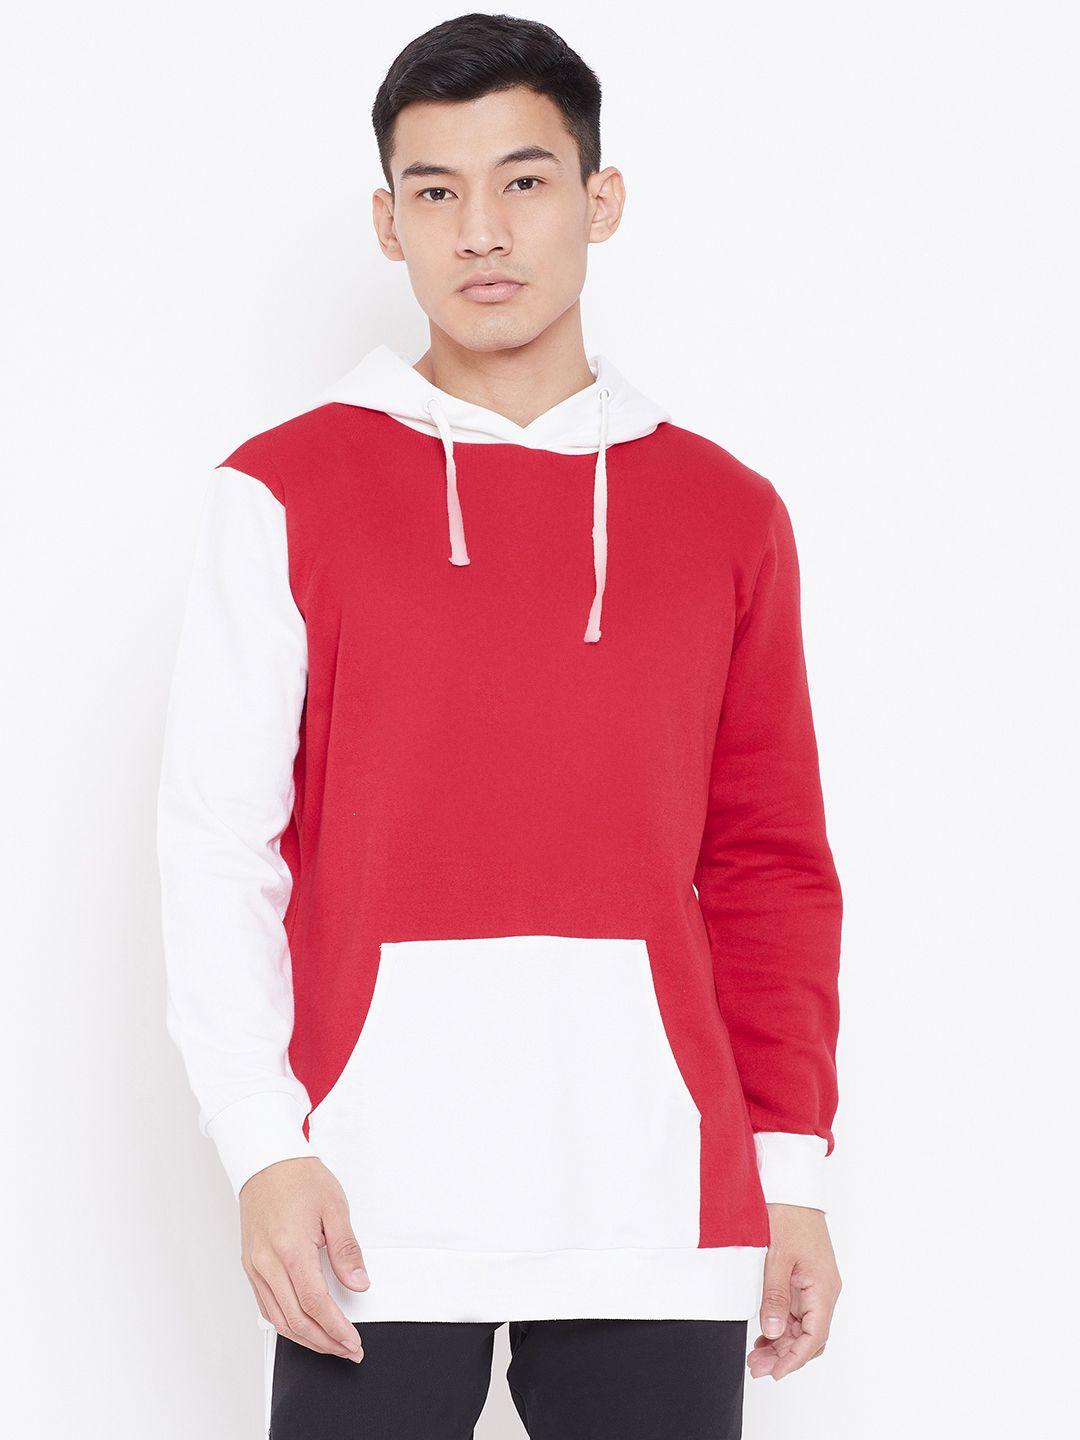 aesthetic bodies men red & white colourblocked hooded sweatshirt